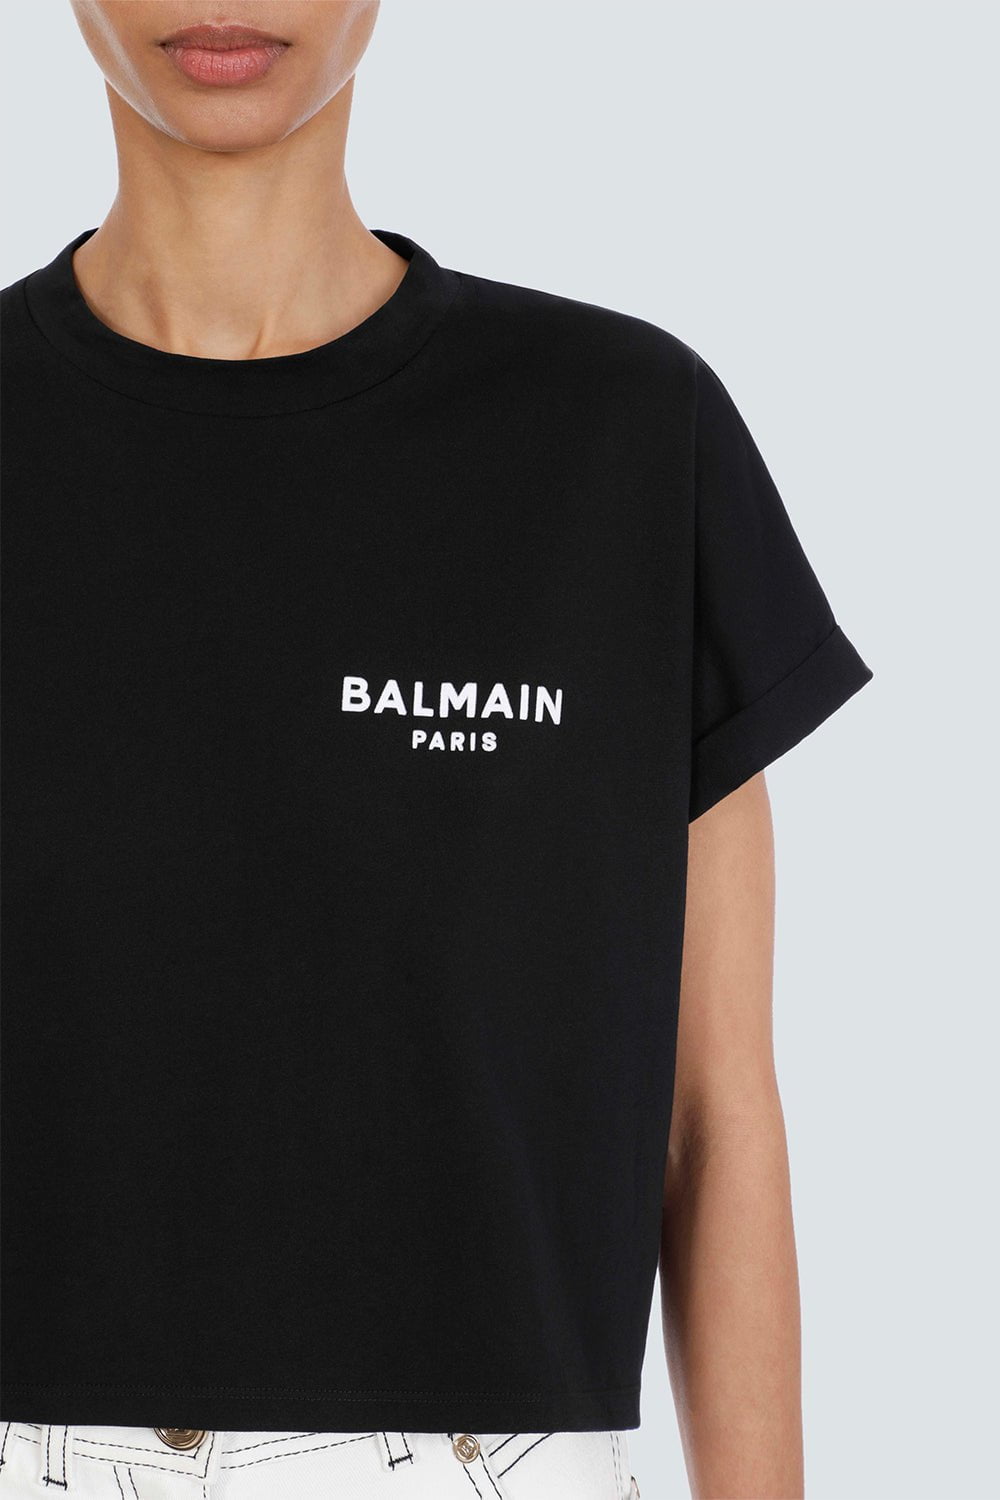 BALMAIN-Flocked Paris Cropped T-Shirt - Noir-